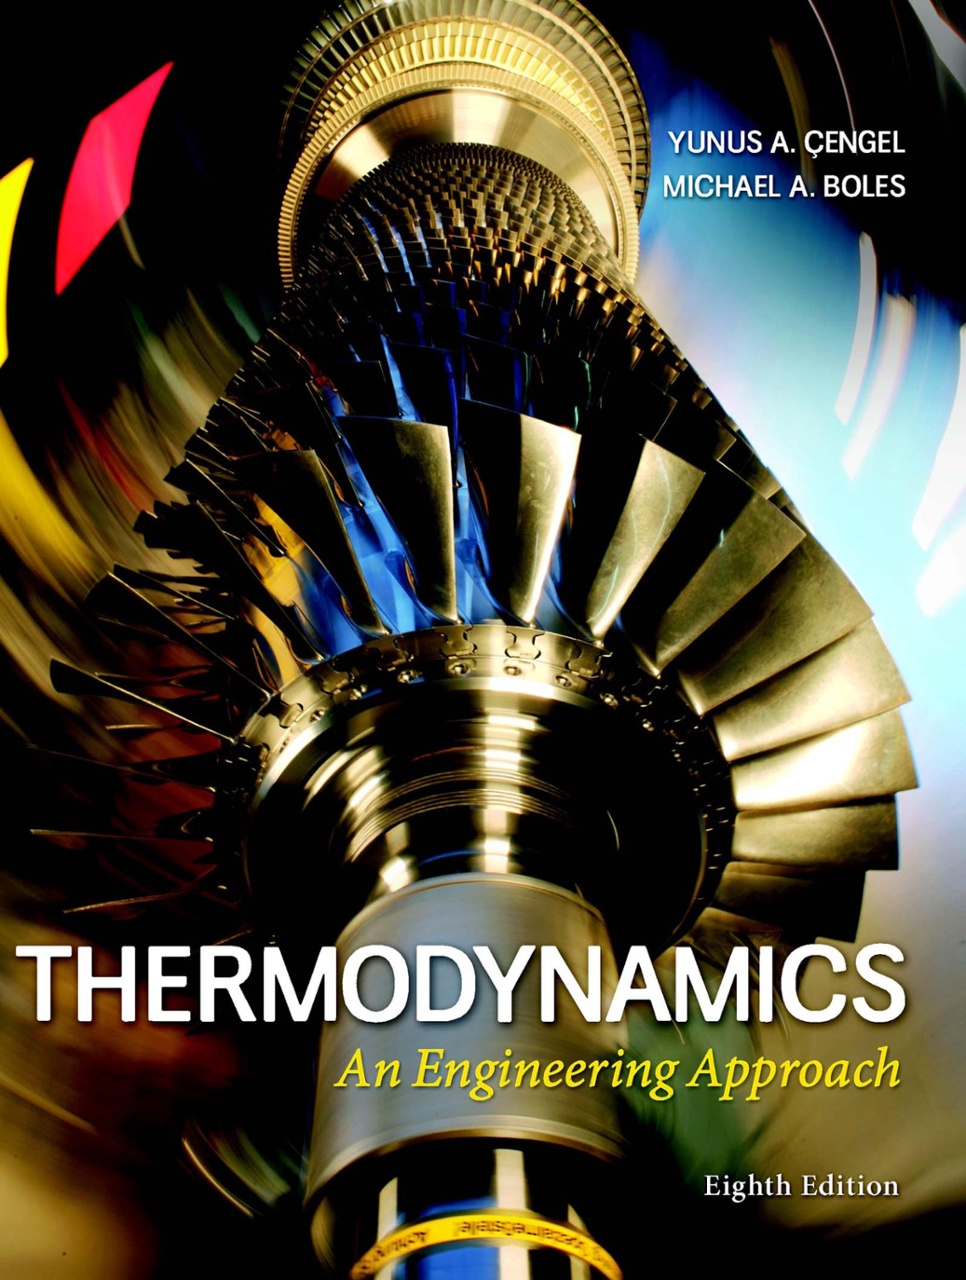 Thermodynamics: An Engineering Approach 8 Edición Yunus A. Cengel PDF